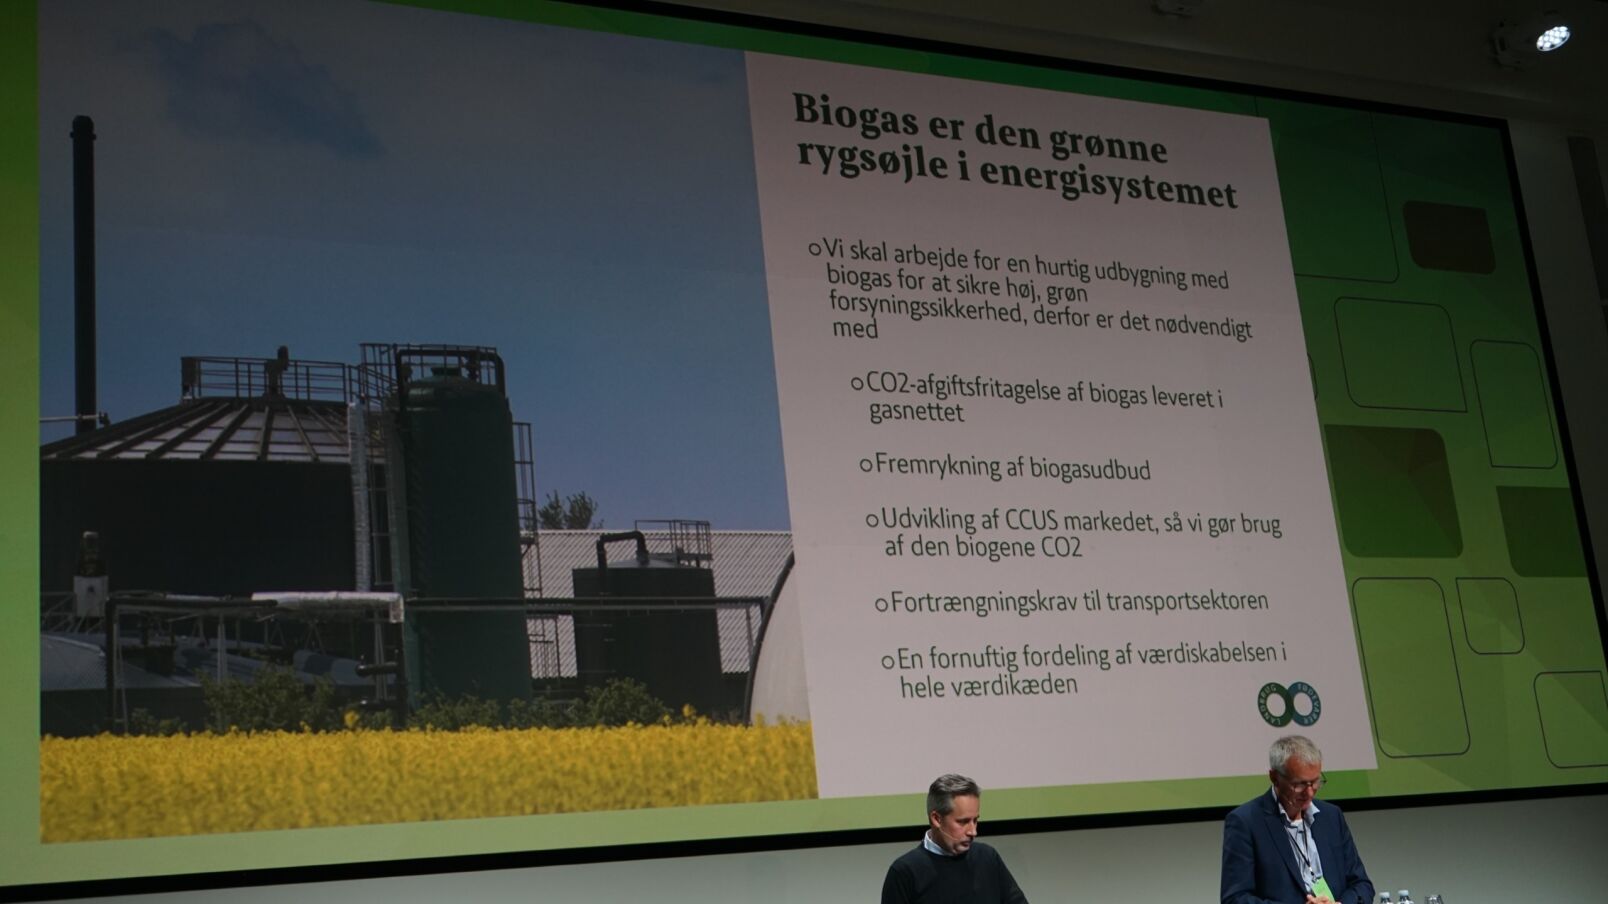 Biogas er den grønne rygsøjle LF